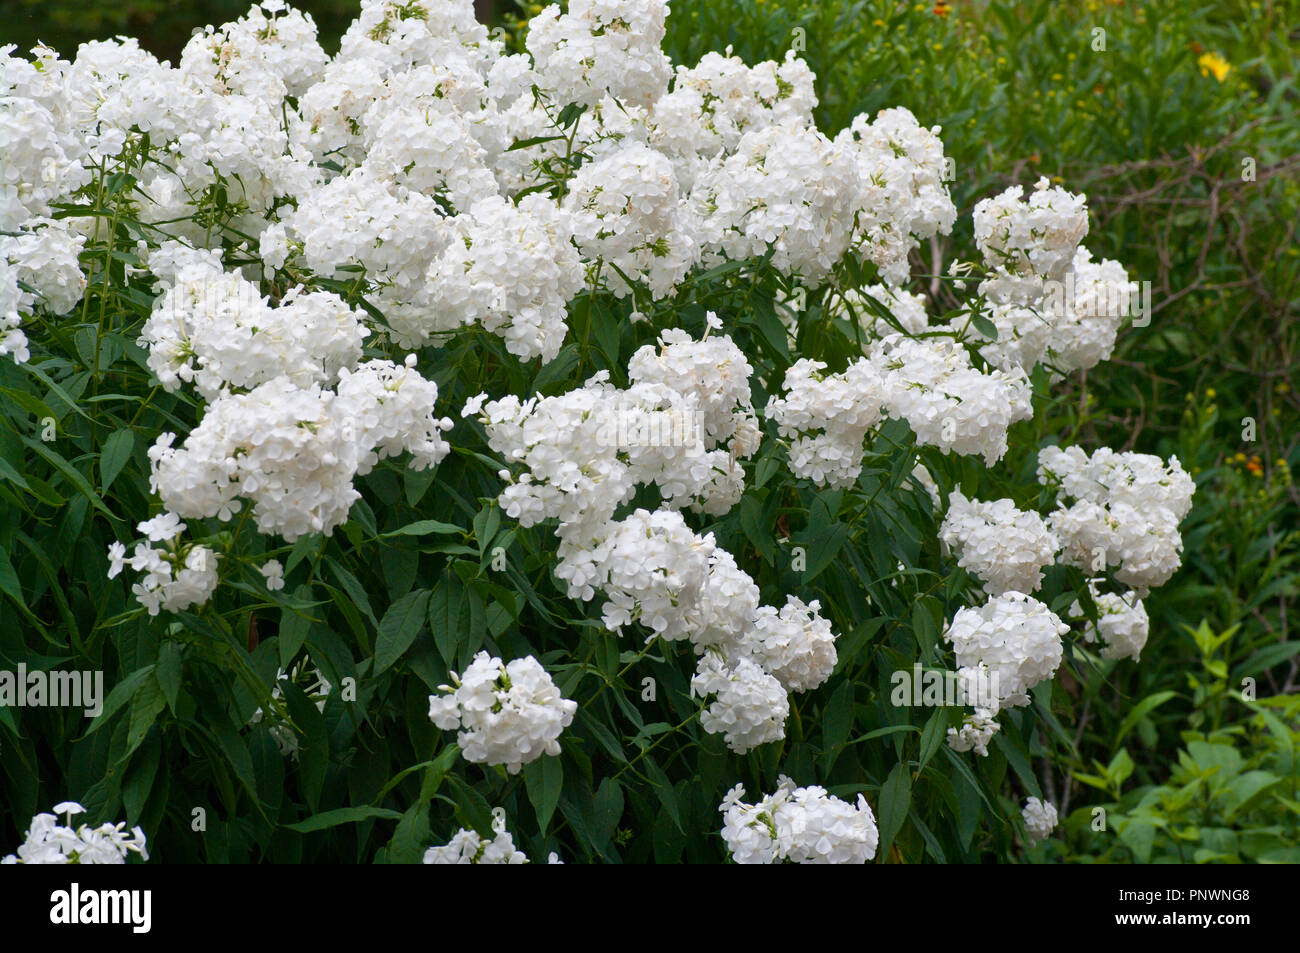 White Perennial  Phlox Flower Heads Flowers Stock Photo